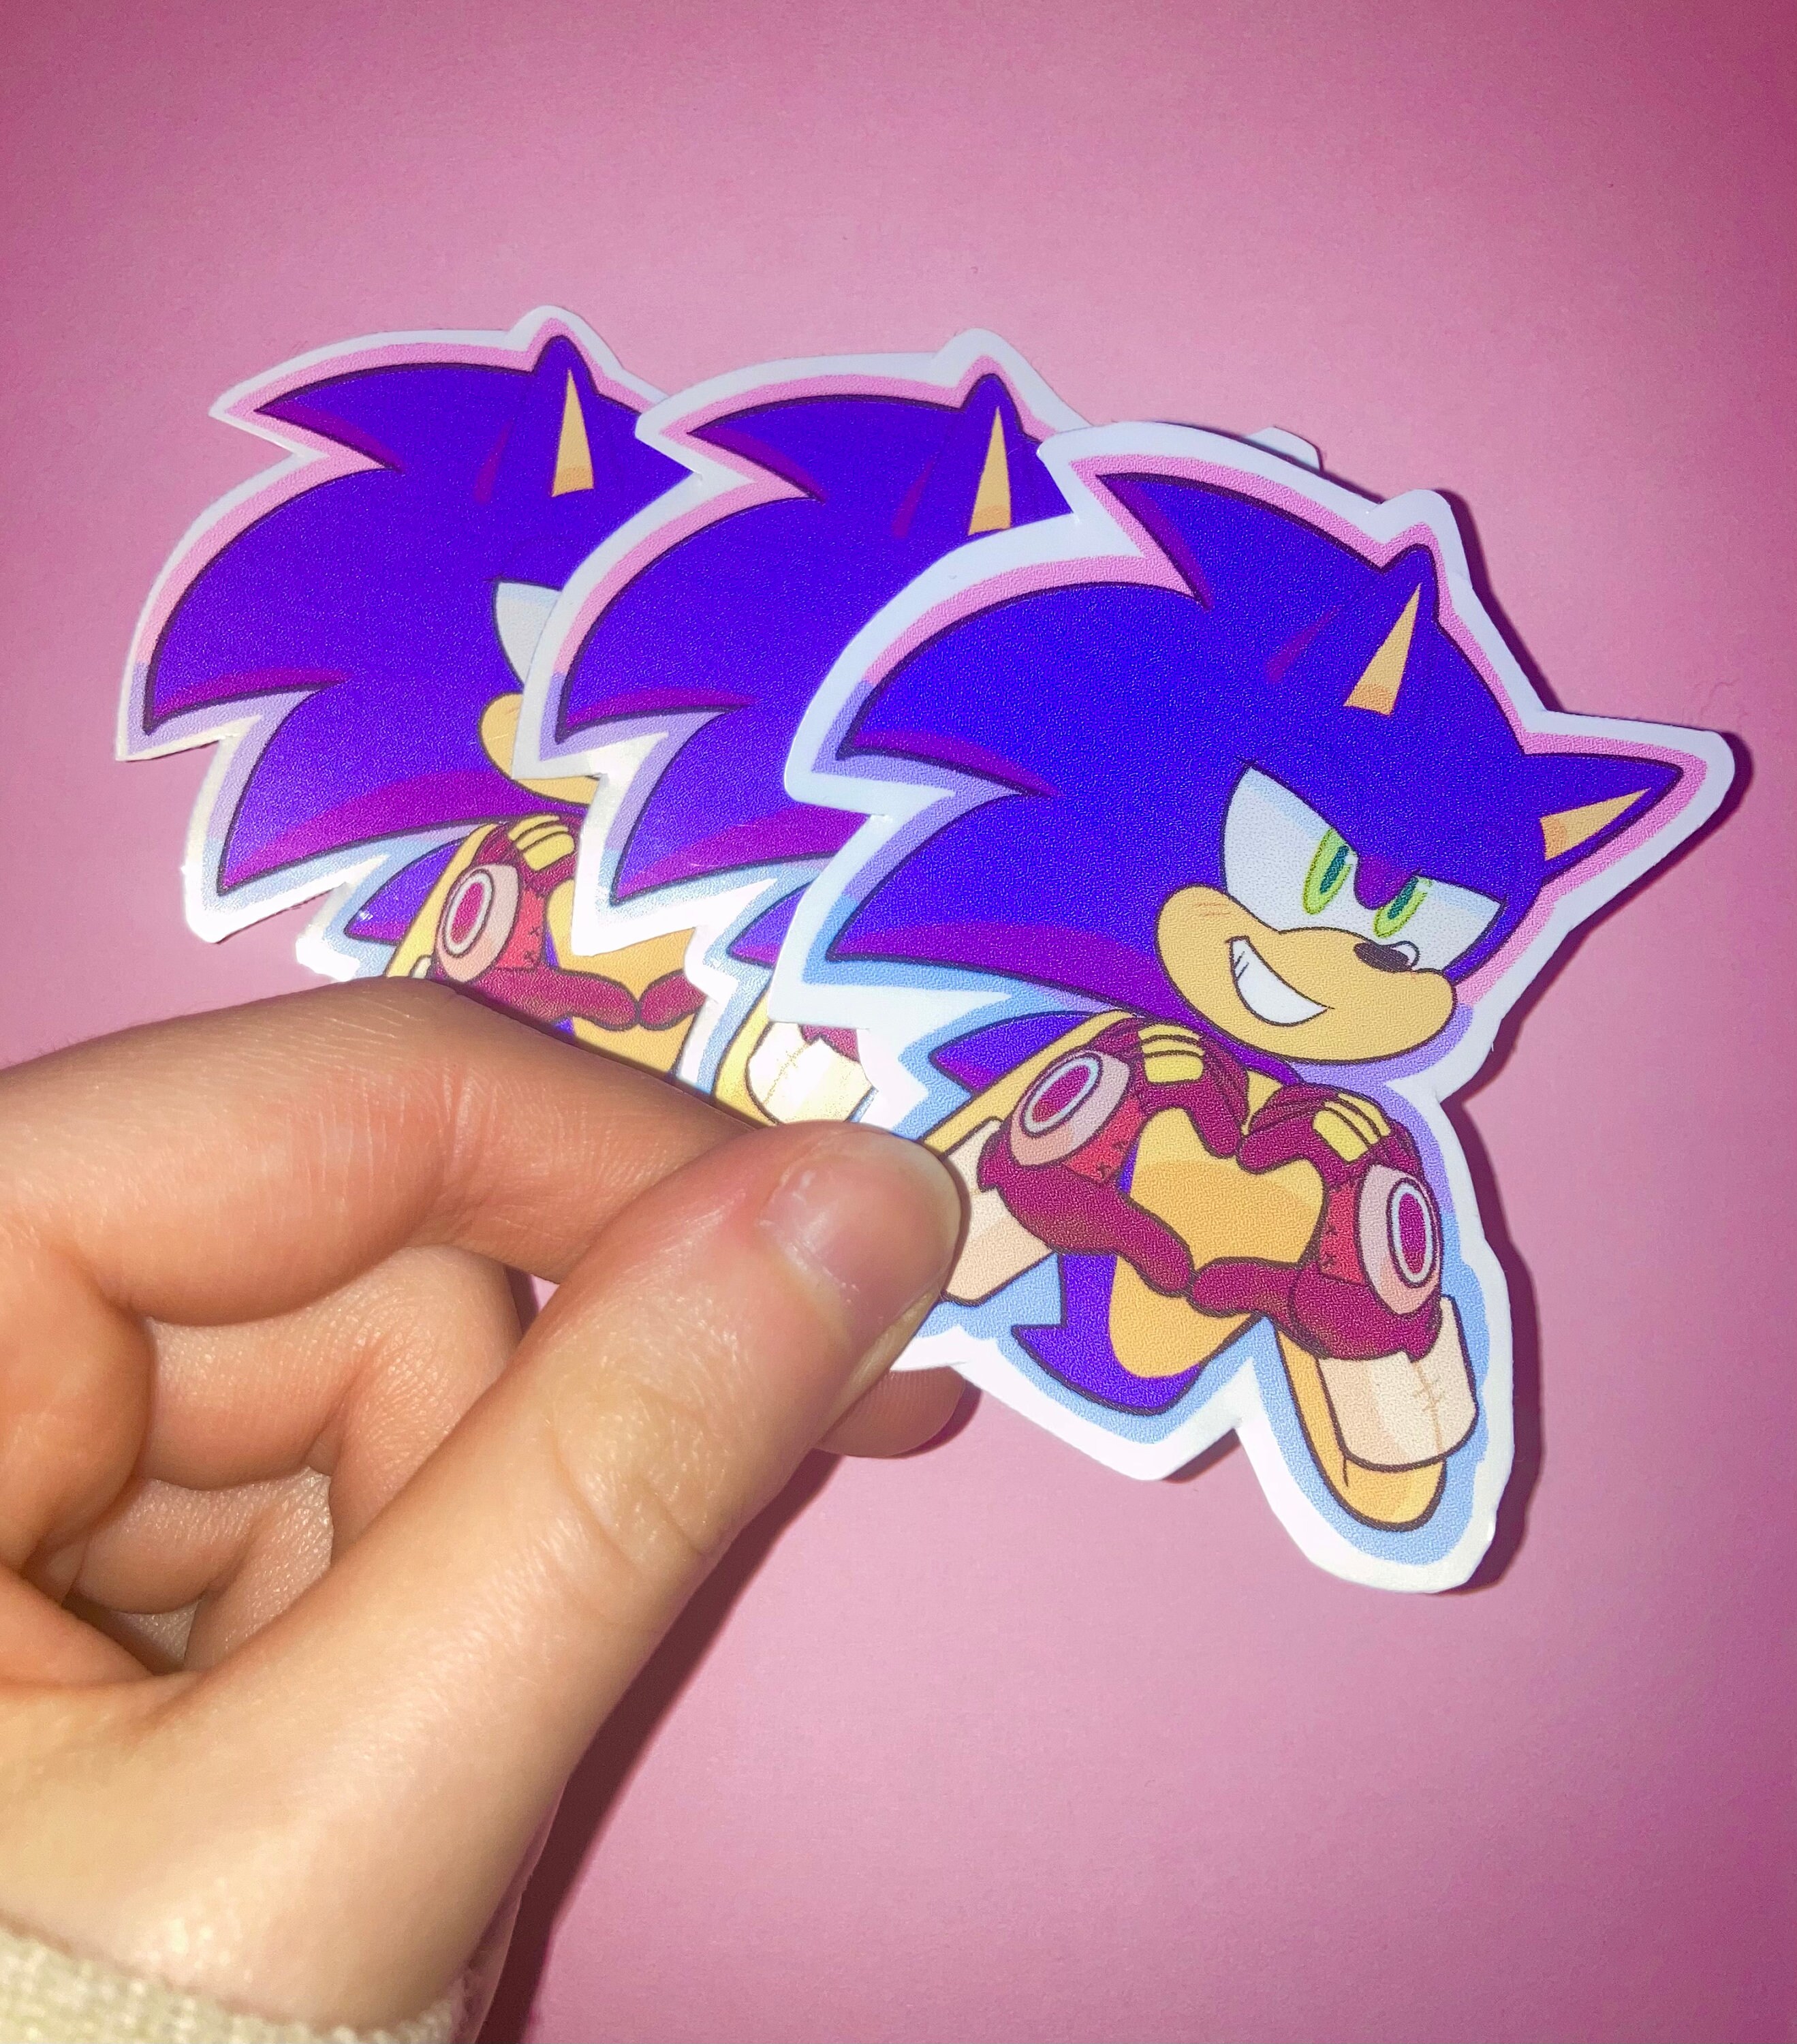 CLASSIC SONAMY!! 💙💖 - Sonic The Hegdehog - Sticker